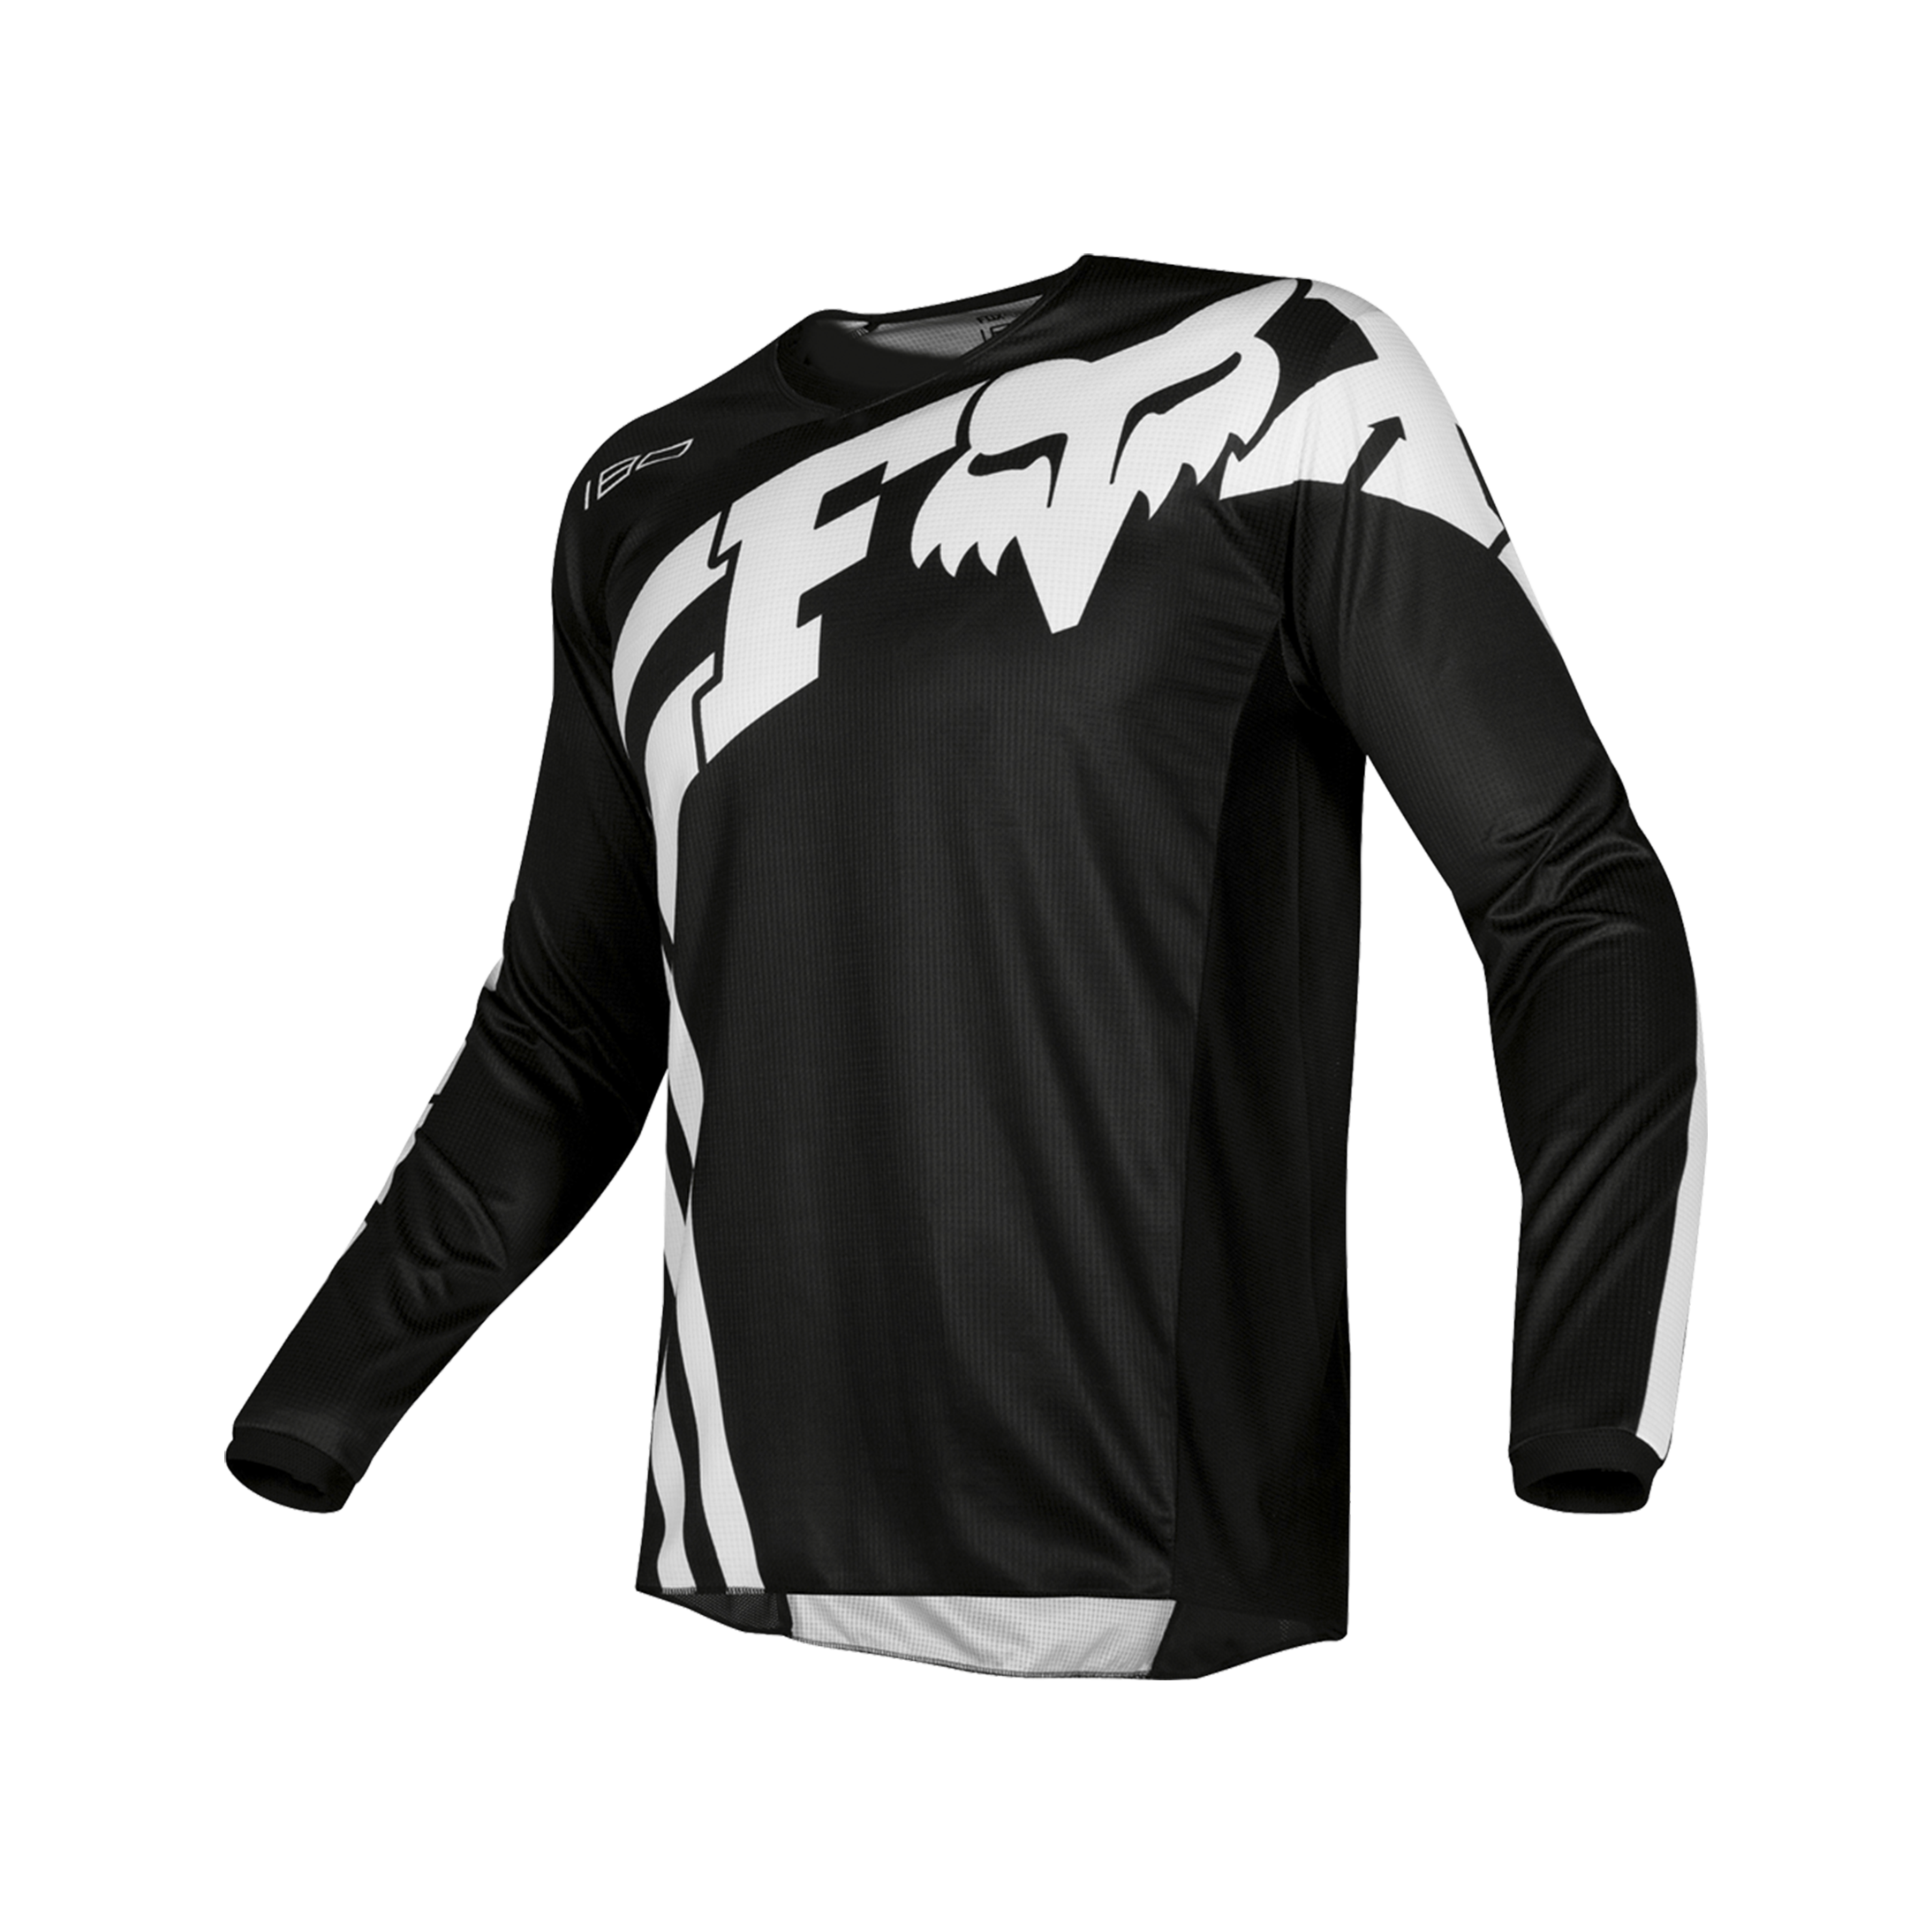 Design motocross jerseys by yourself - Create MX jersey design